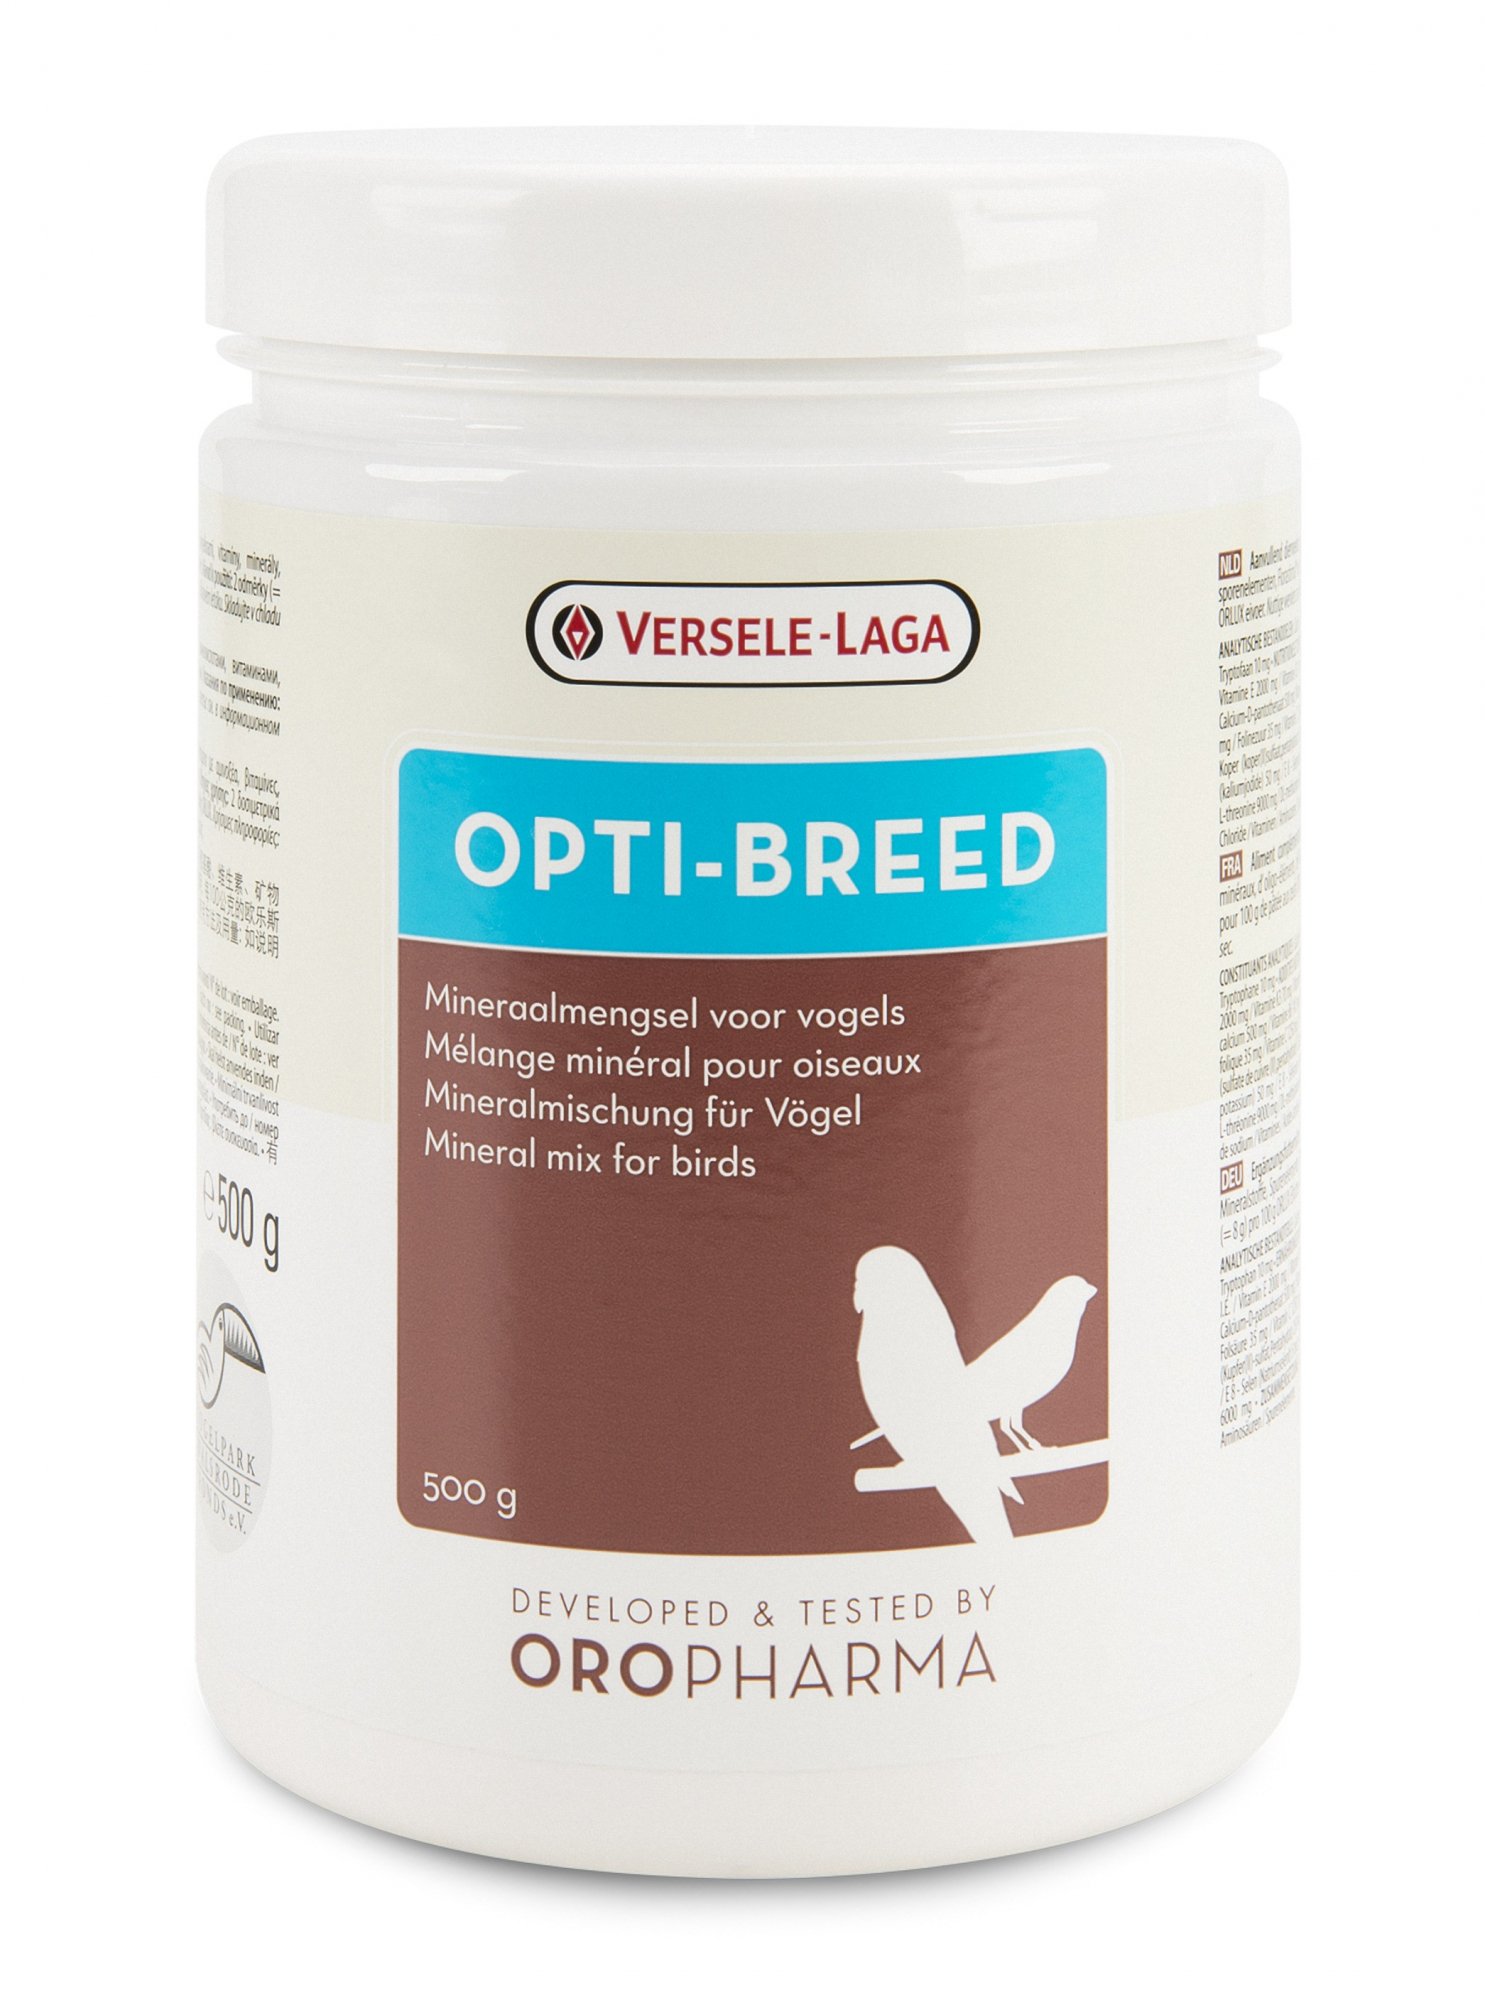 Oropharma Opti-Breed mistura equilibrada de aminoácidos, vitaminas, minerais e oligoelementos